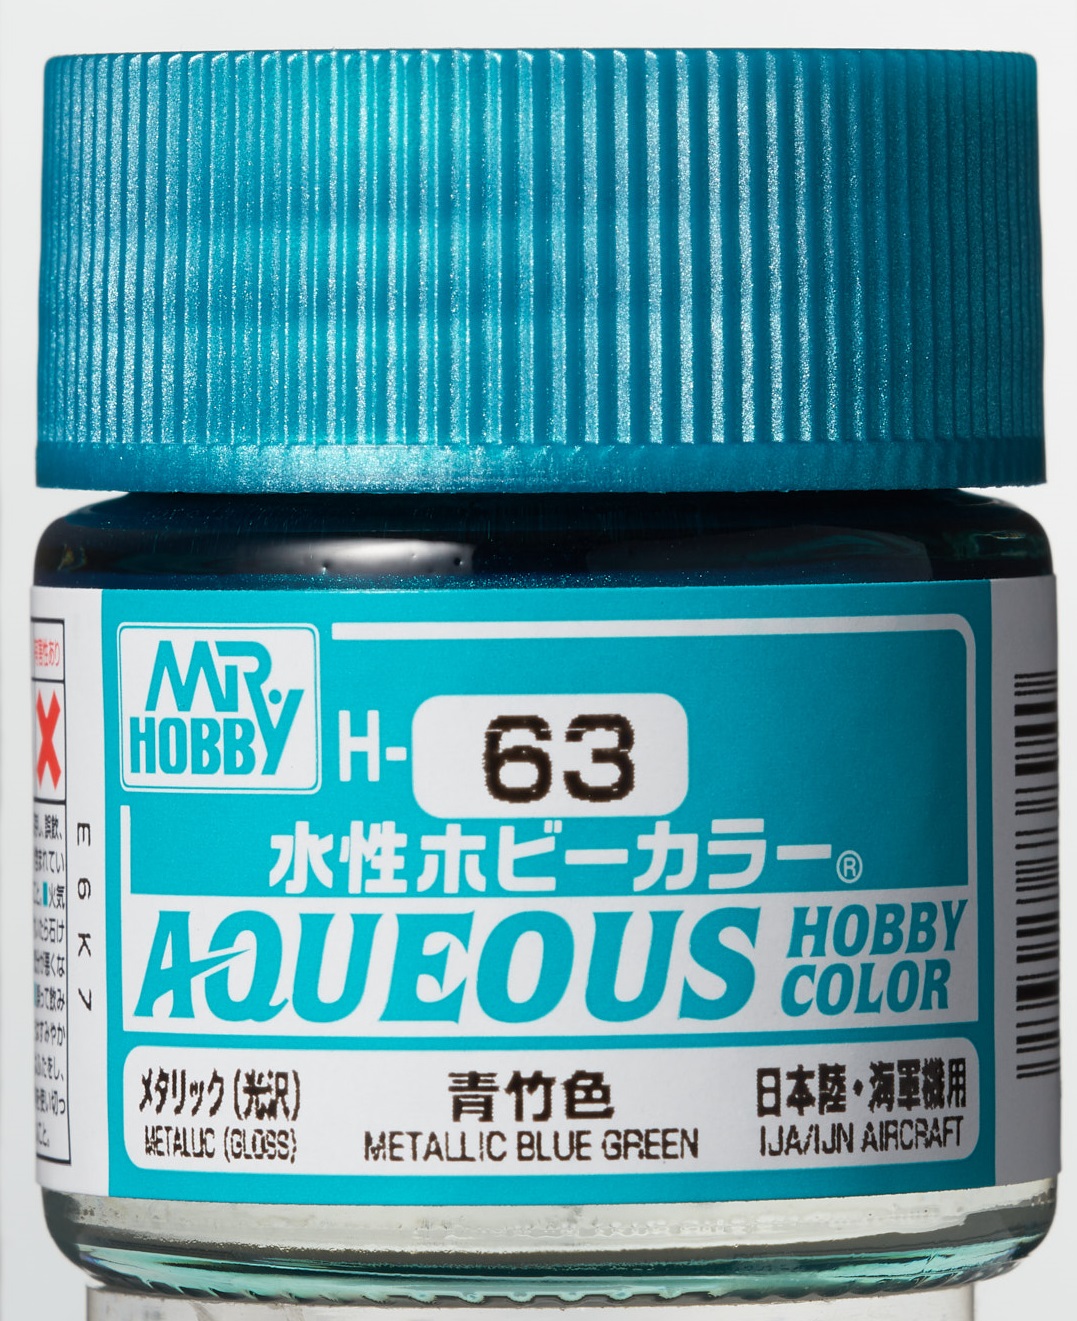 Mr. Aqueous Hobby Color - Metallic Blue Green - H63 - Blaugrün Metallic